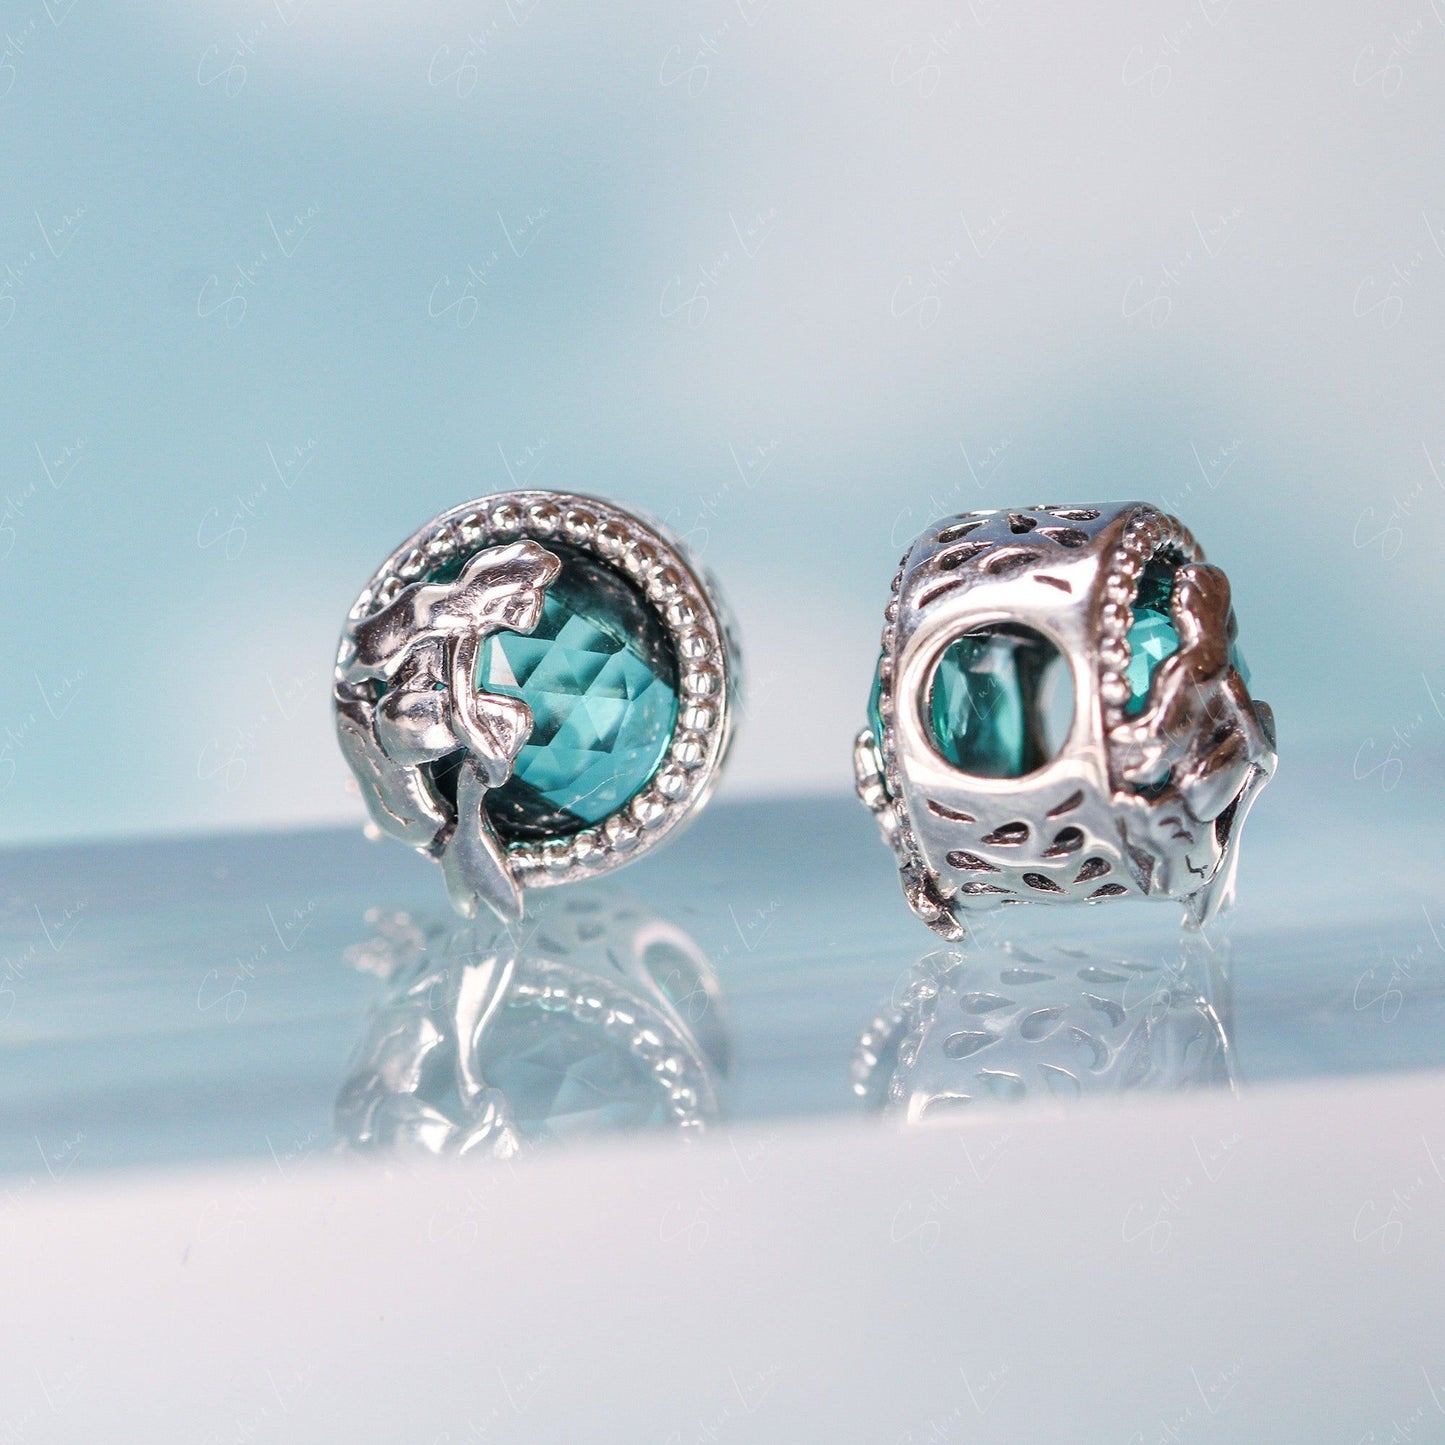 Blue mermaid glass bead charm